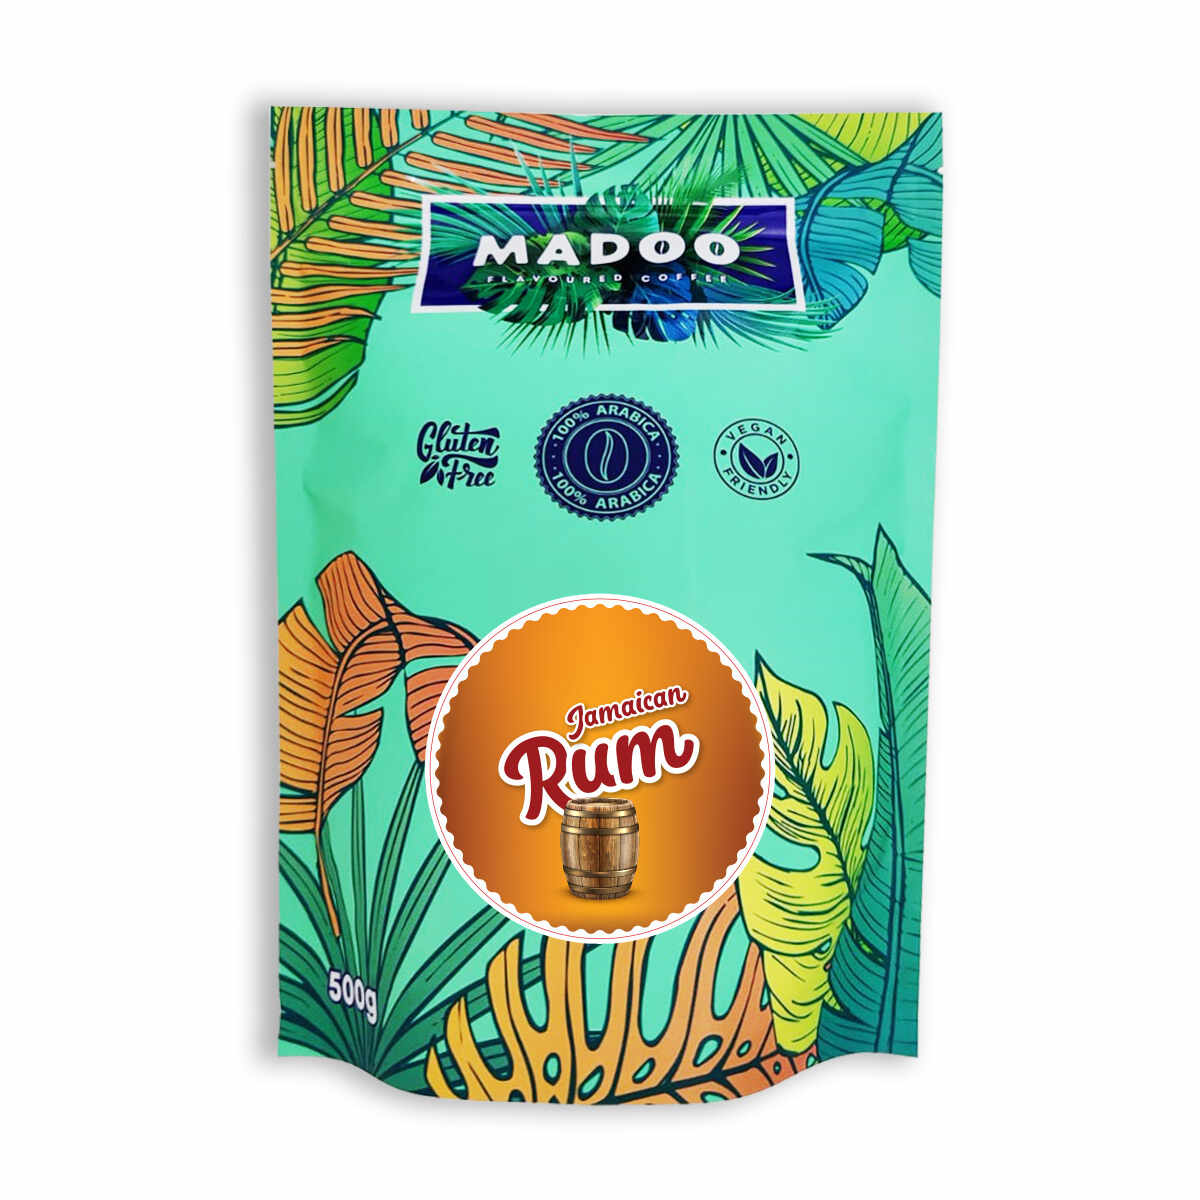 Madoo Jamaican Rum cafea boabe cu aroma de rom 500gr